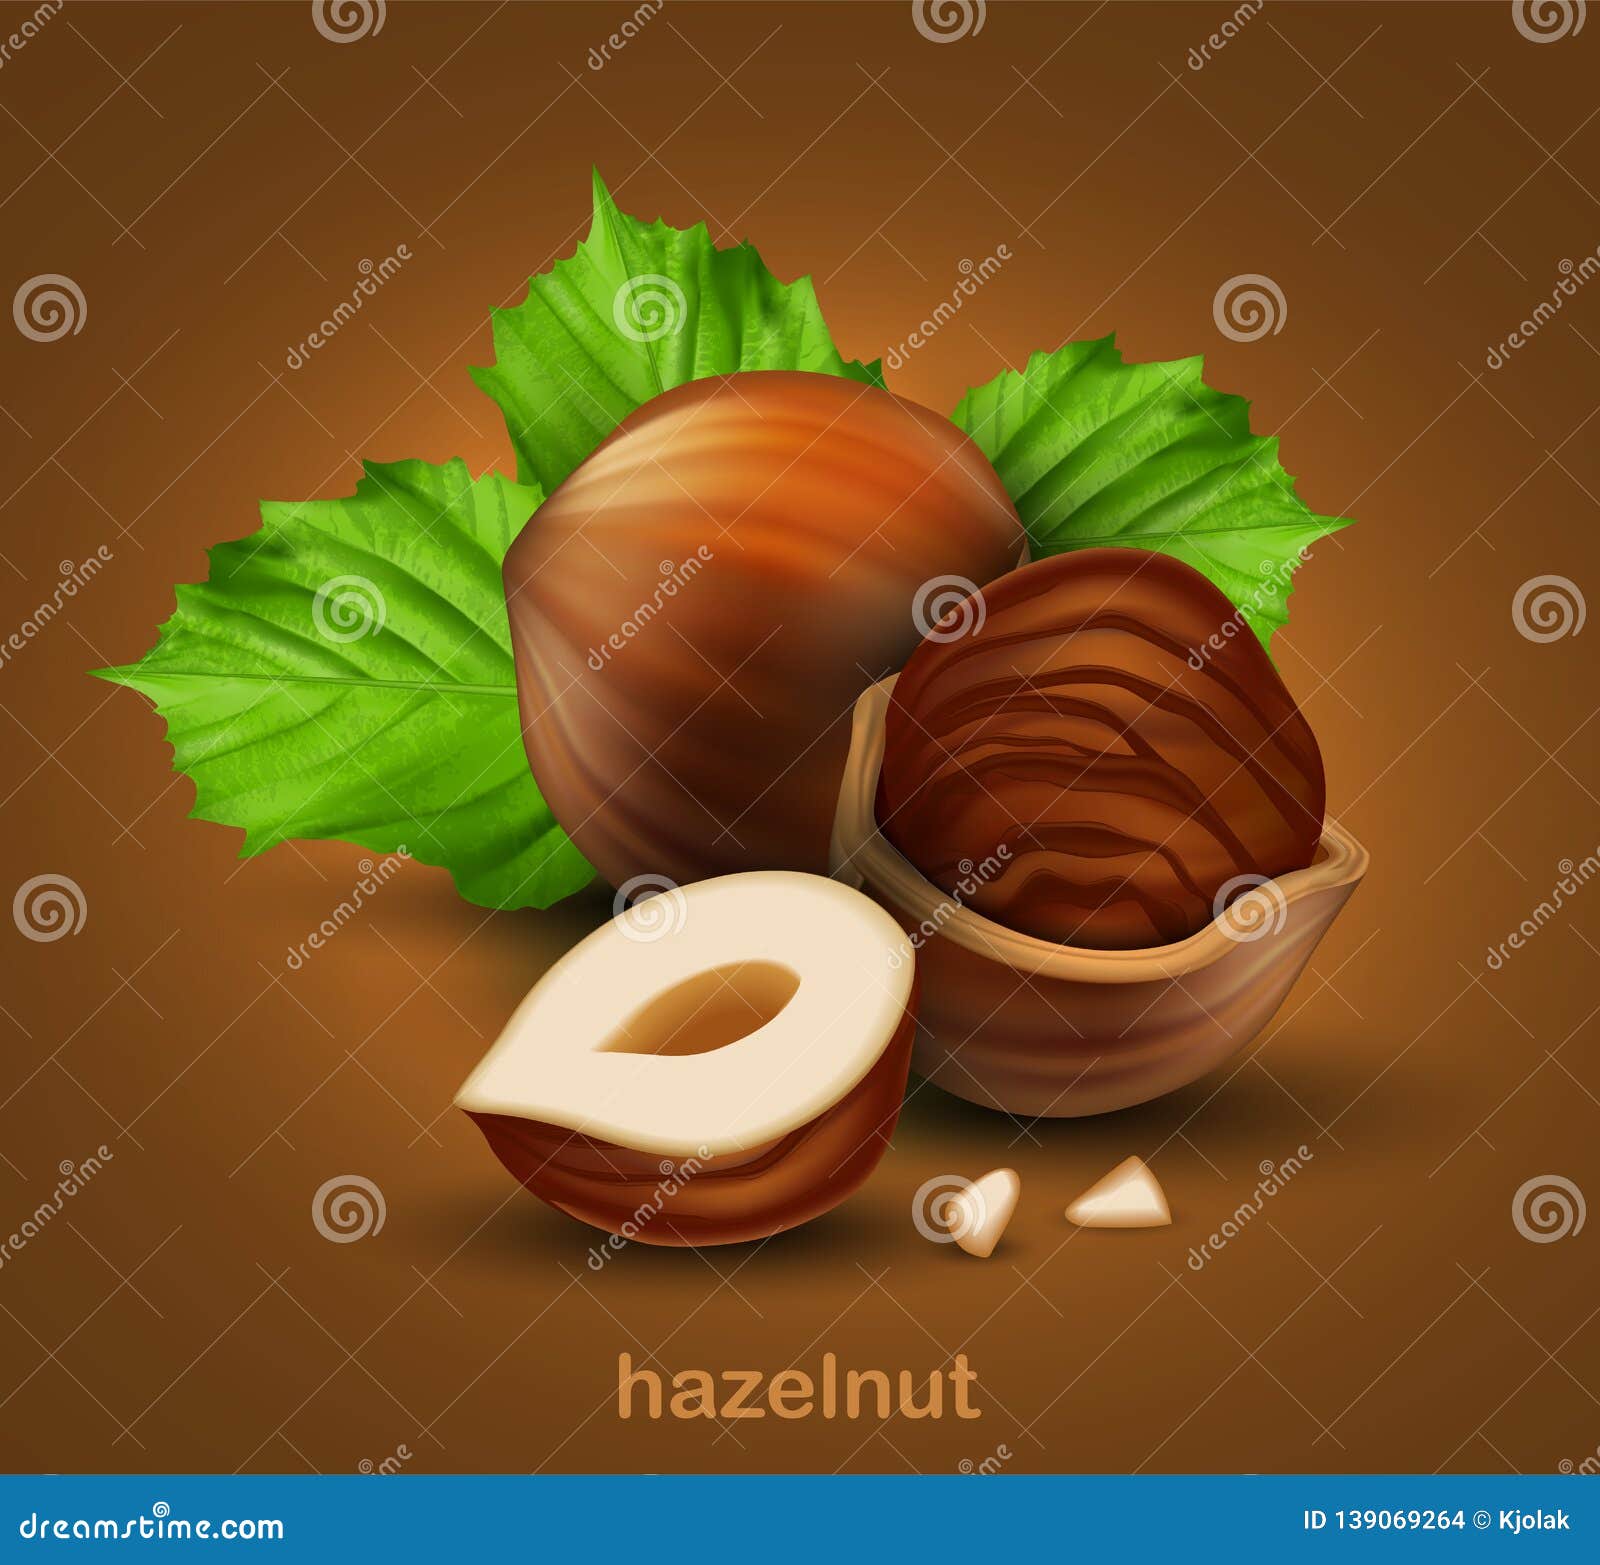 Hazelnuts Set Whole Peeled Sigles And Groupwith Leaves Hand Drawn